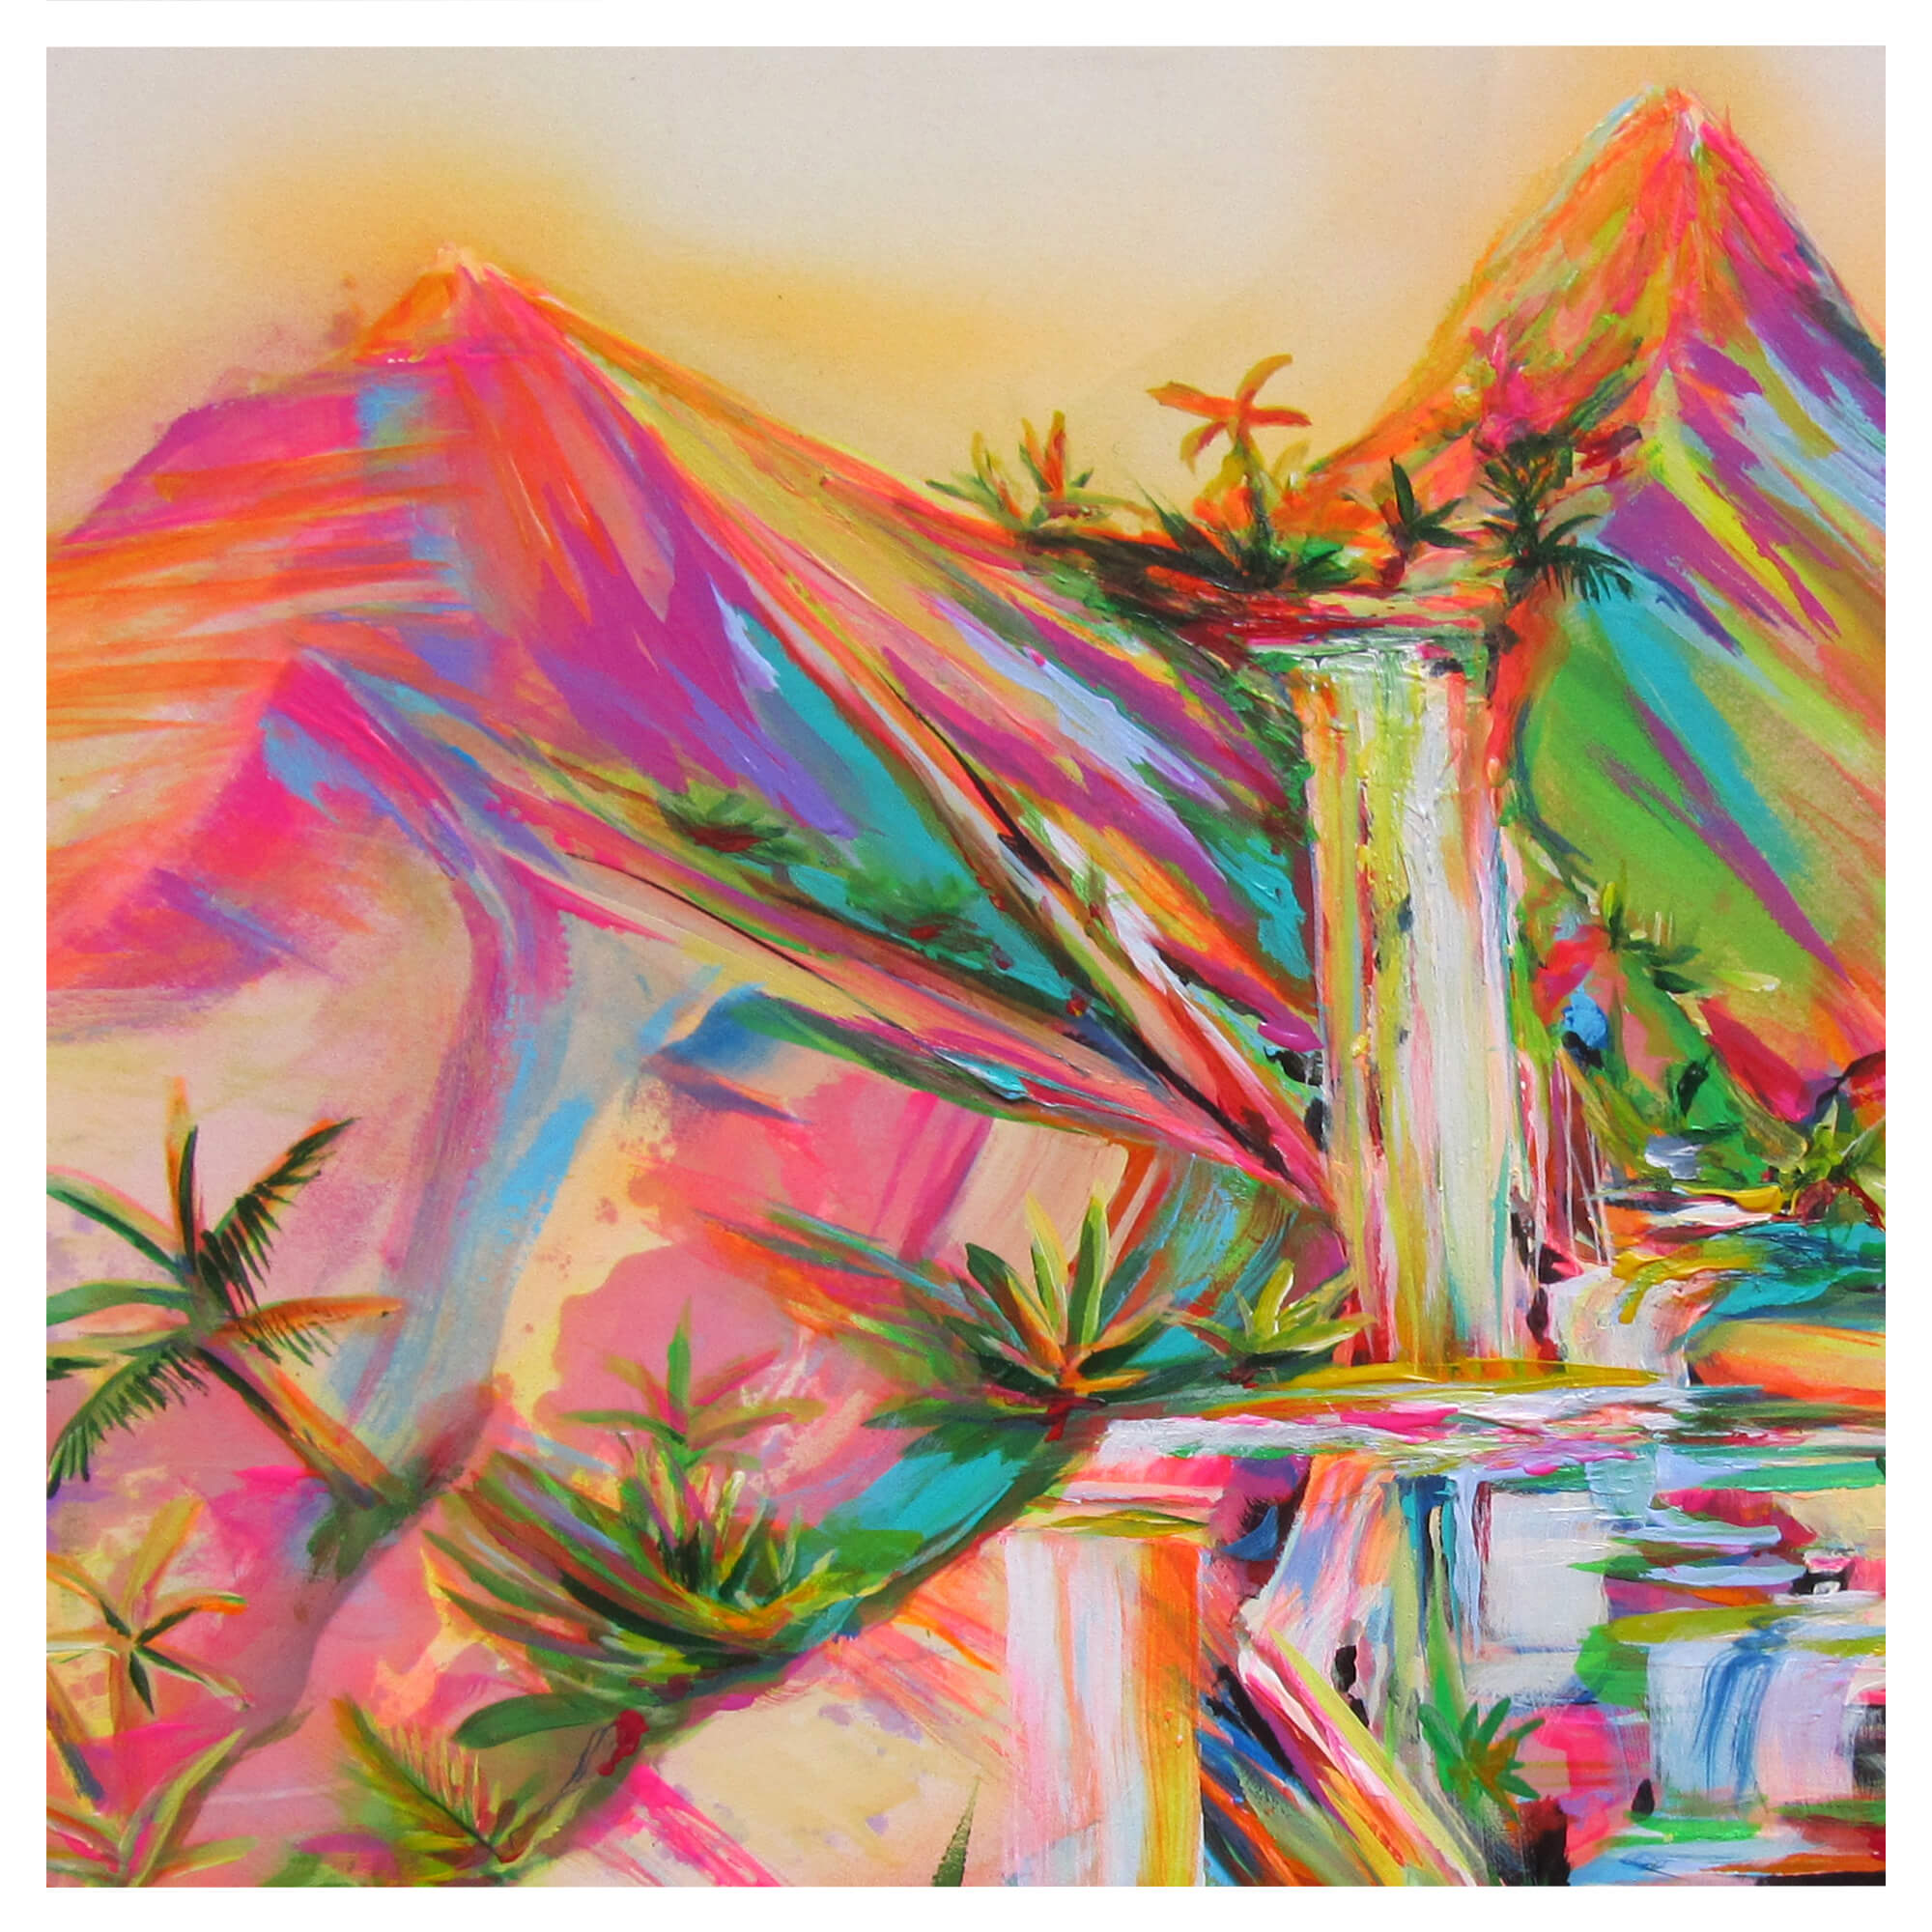 Mountain peak and waterfall by Hawaii artist Jess Burda